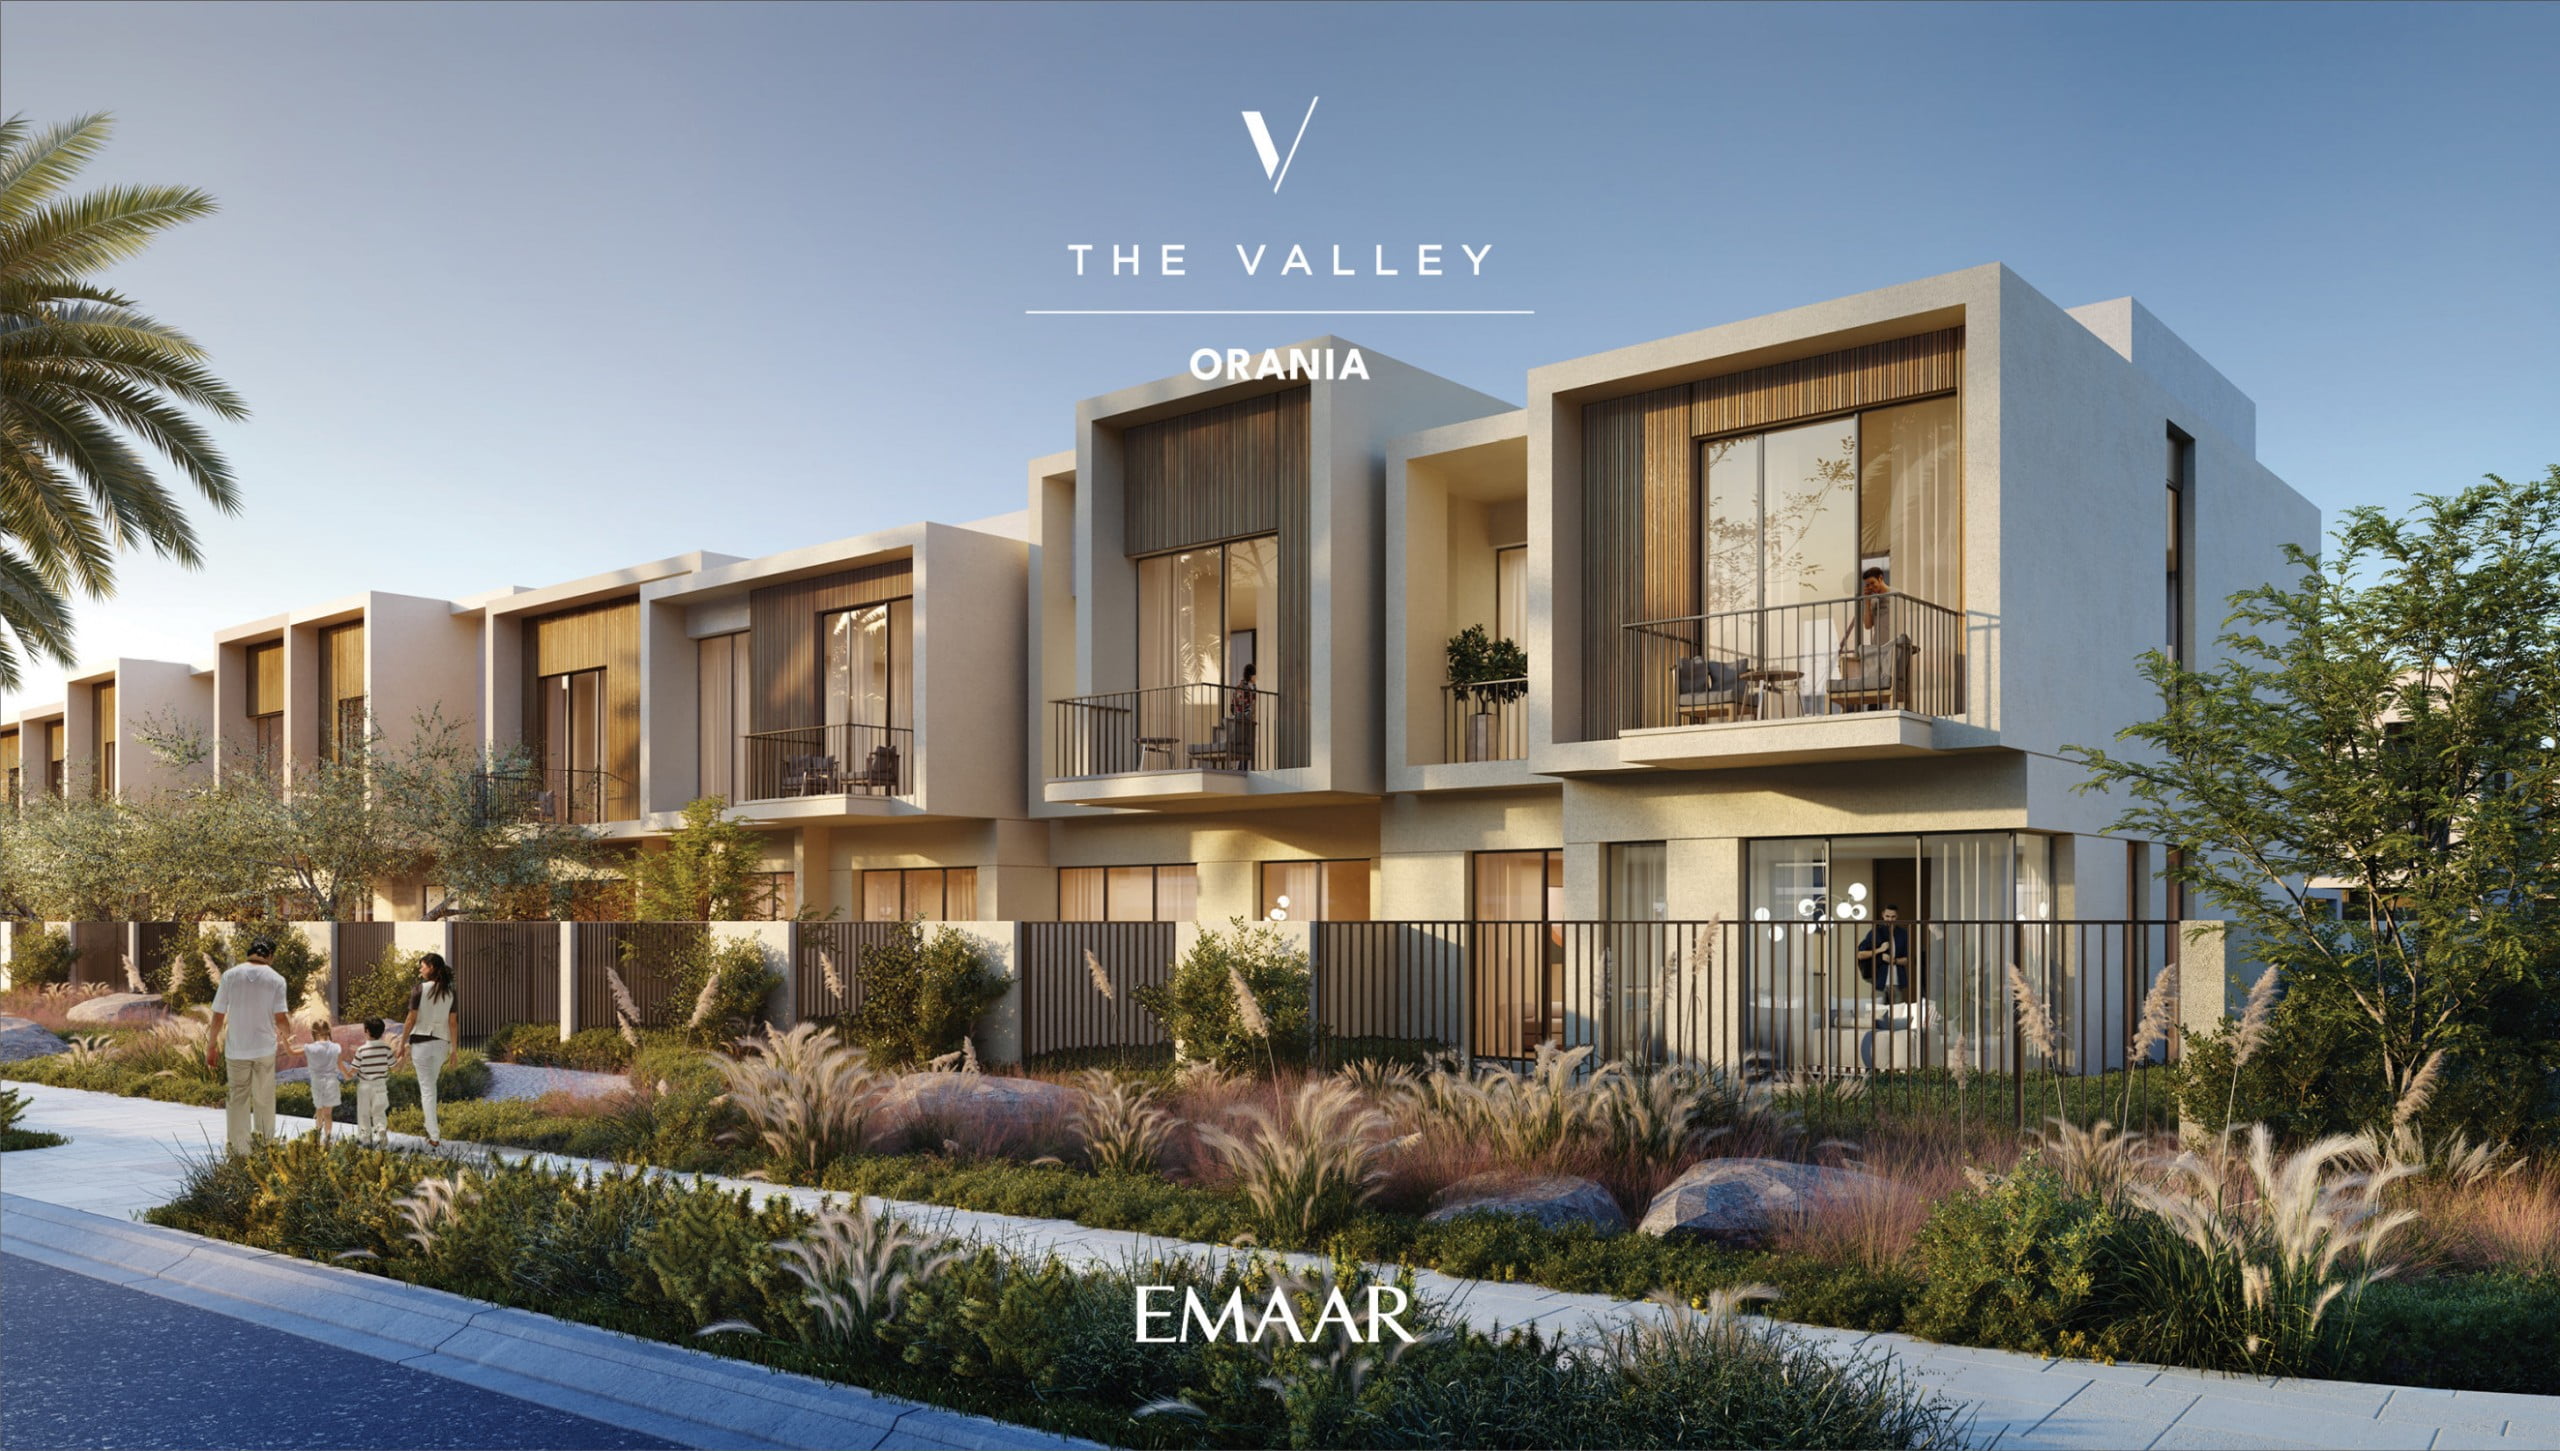 ORANIA THE VALLEY EMAAR 08 scaled - Immobilier Dubai